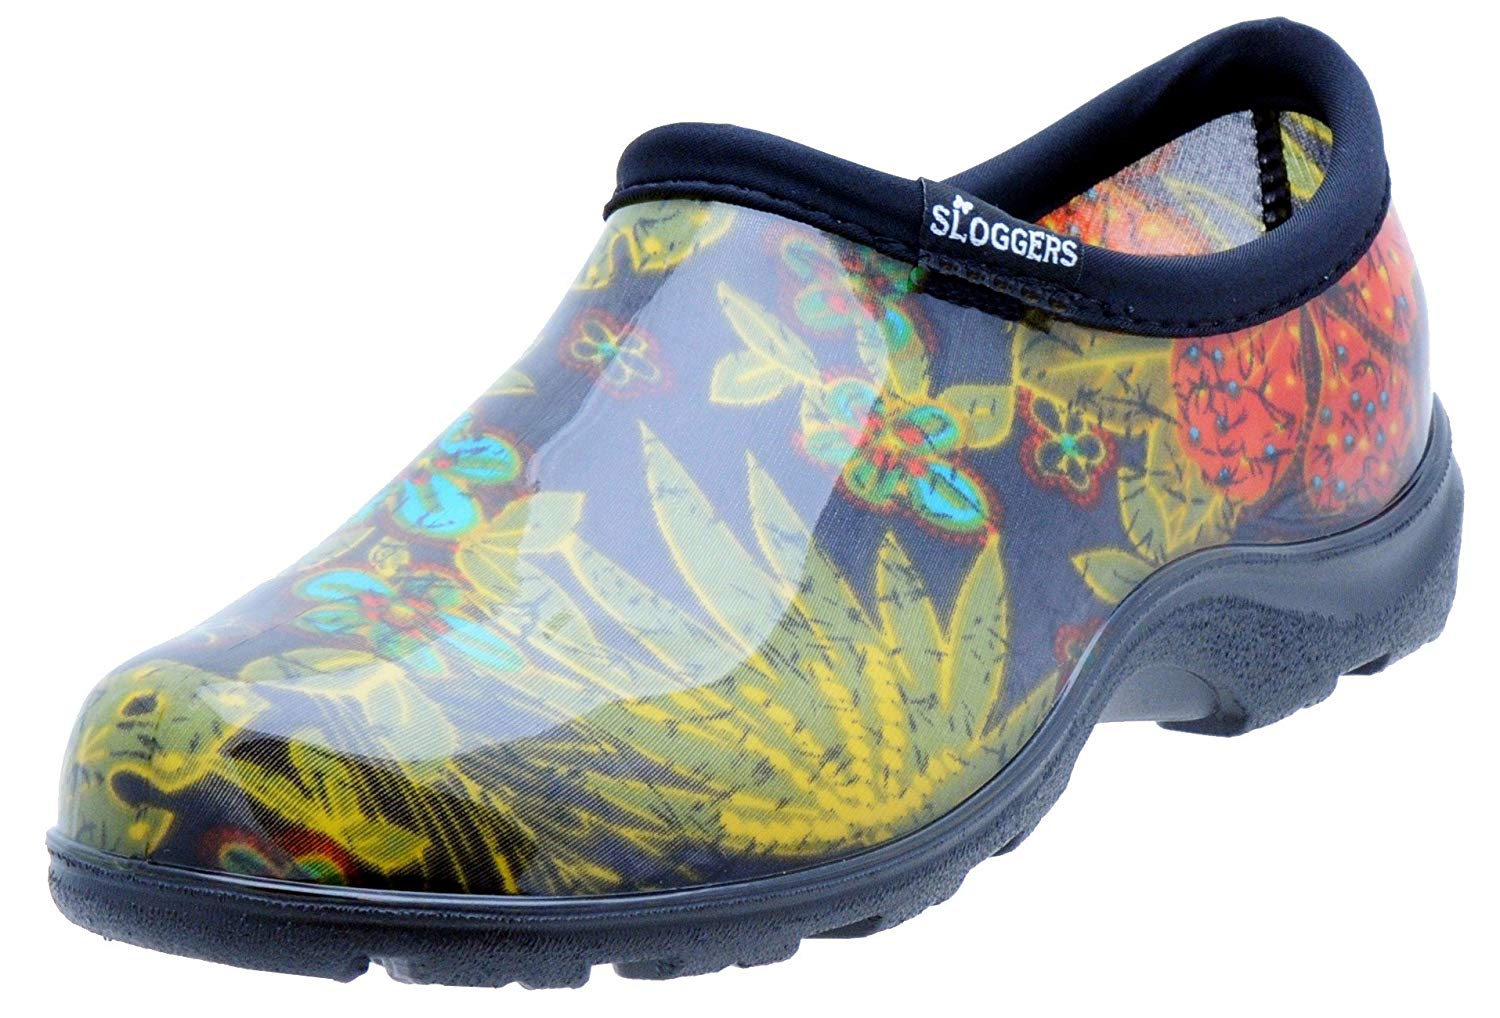 Sloggers Women's Waterproof Rain and Garden Shoe with Comfort Insole, Midsummer Black, Size 9 Style 5102BK09 - Gardening boots